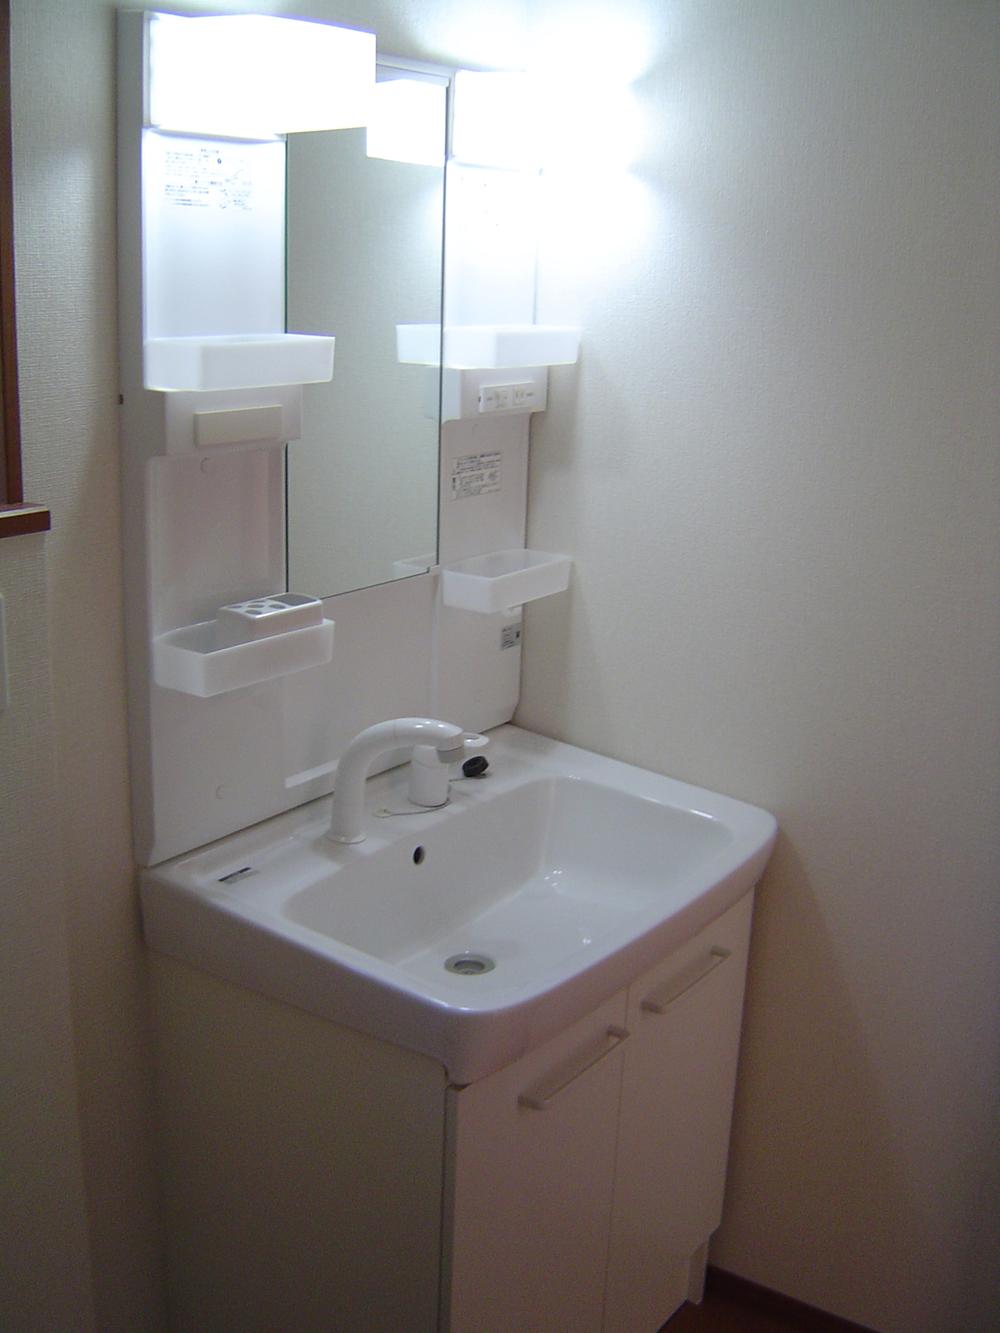 Wash basin, toilet. Local (September 2013) Shooting